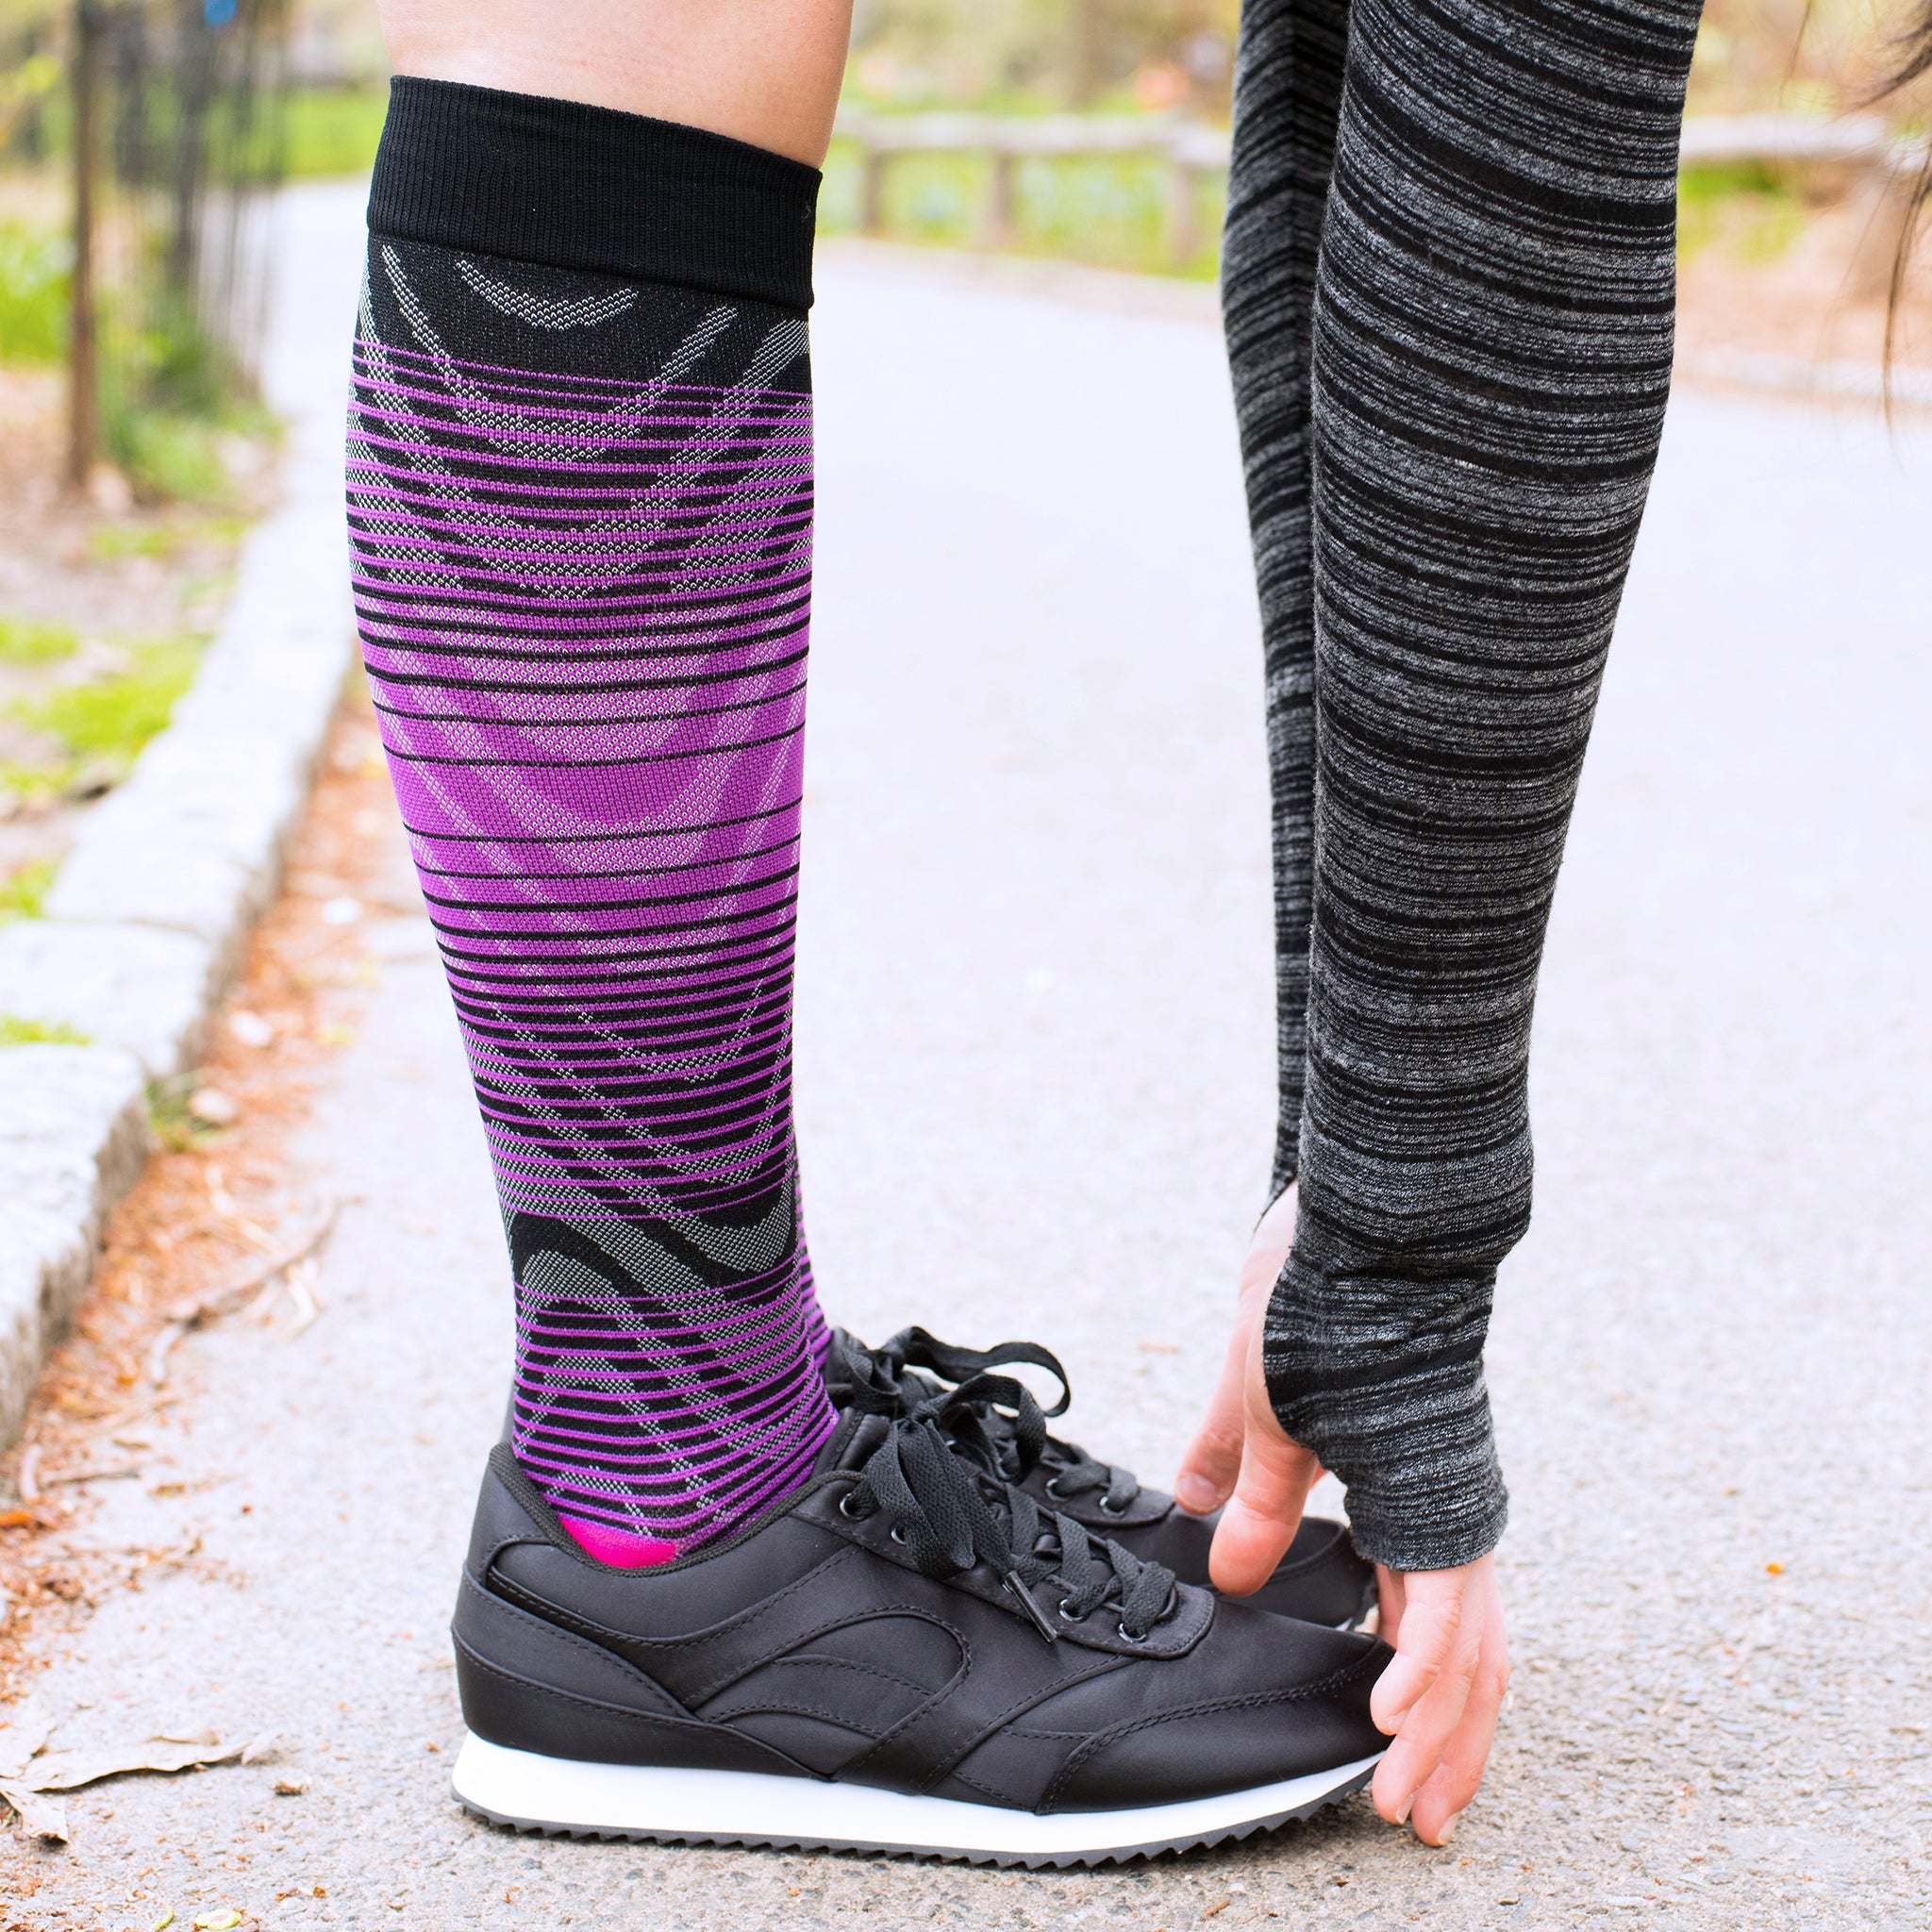 Sports: Benefits of compression socks